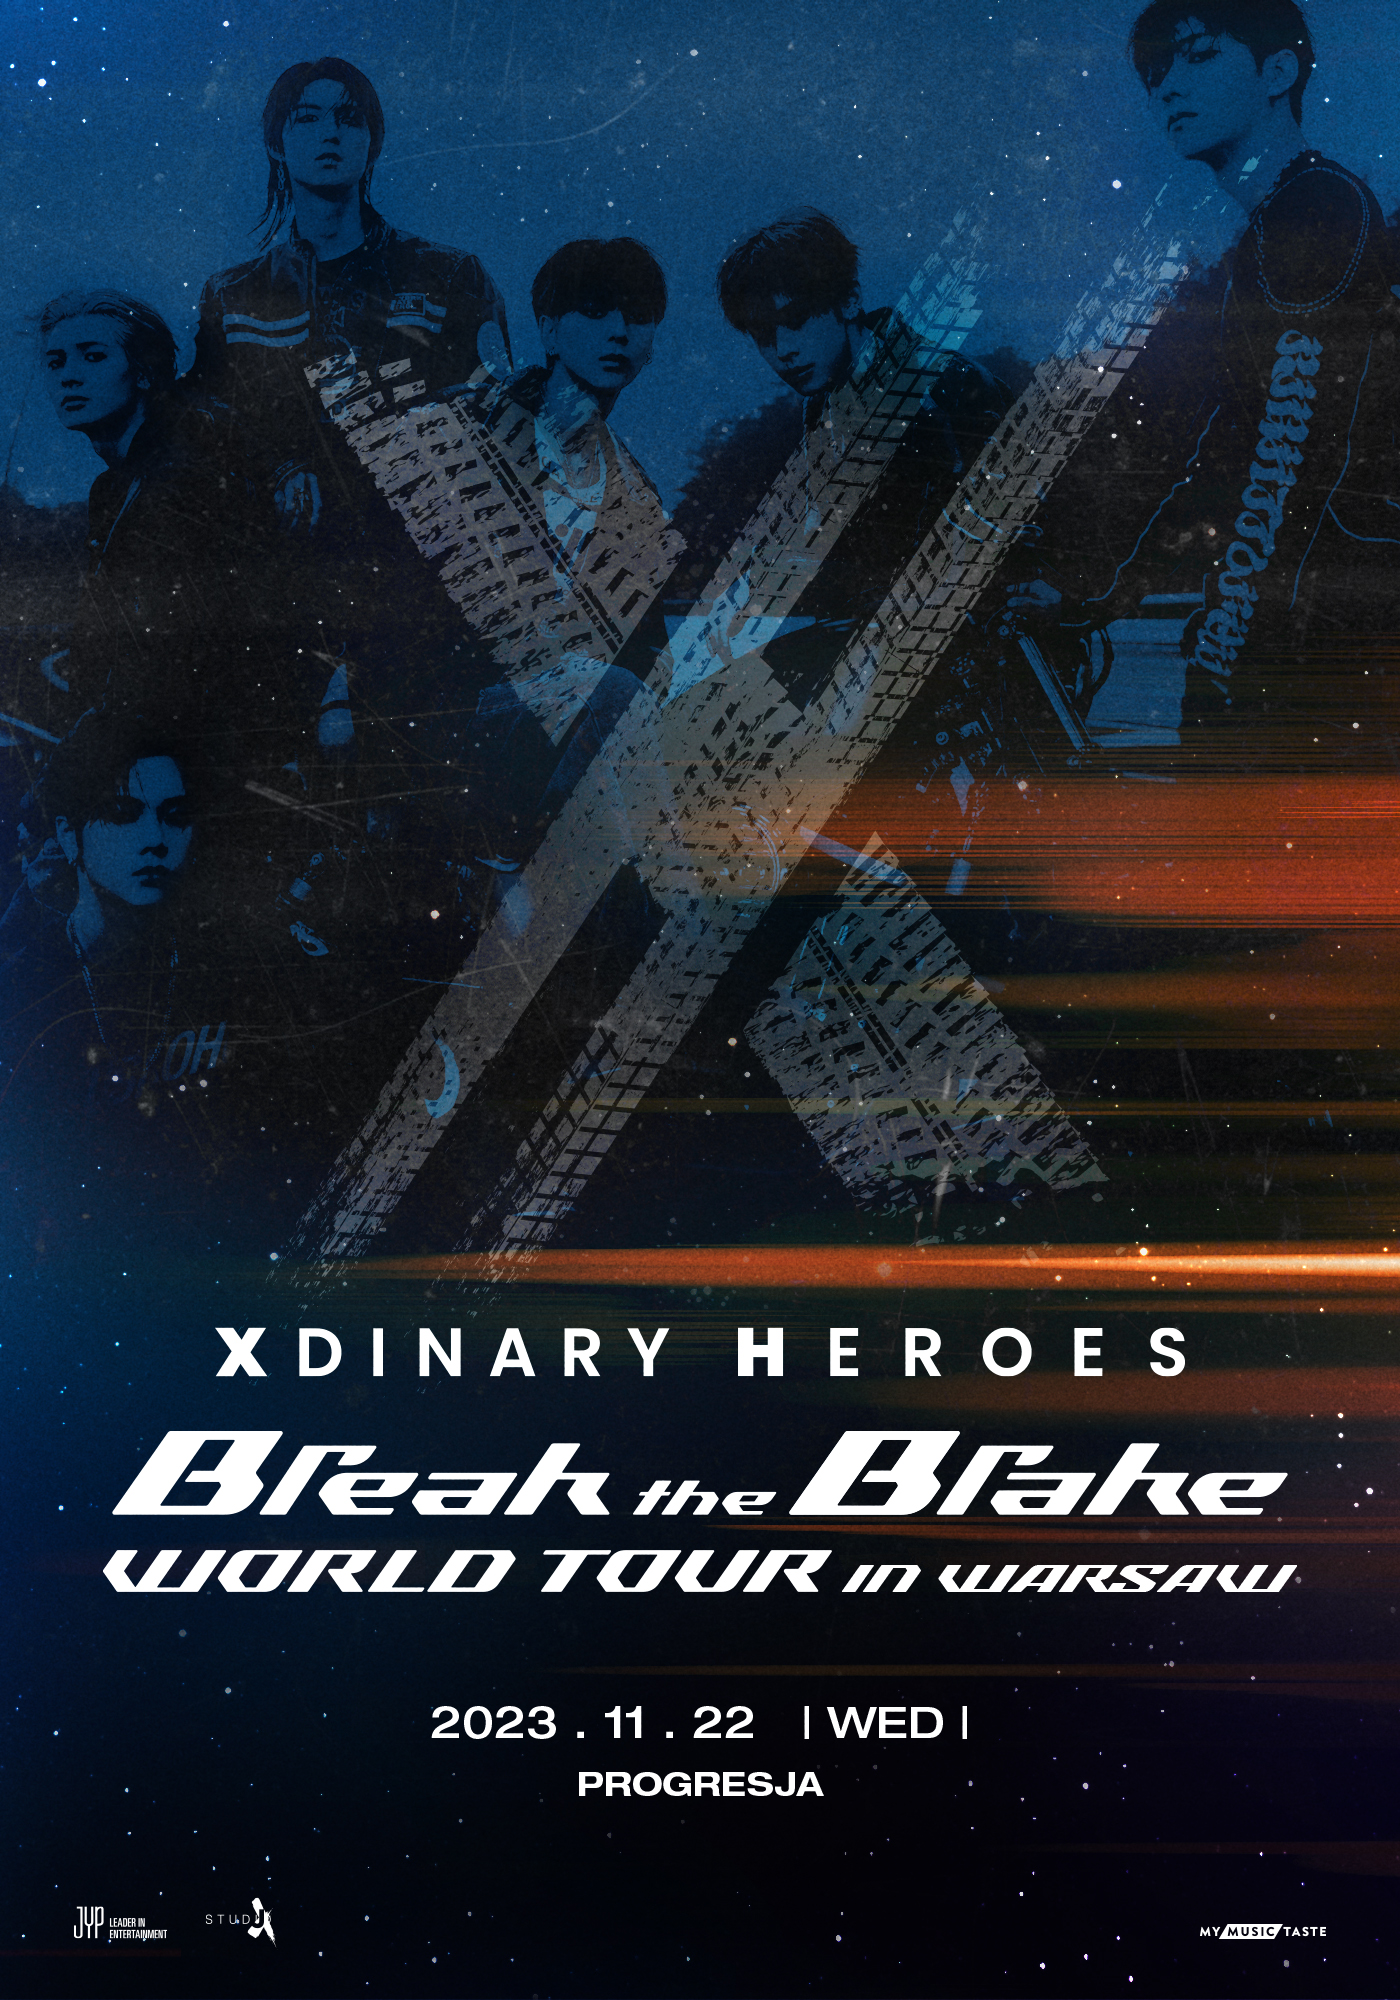 Xdinary Heroes “Break the Brake” World Tour